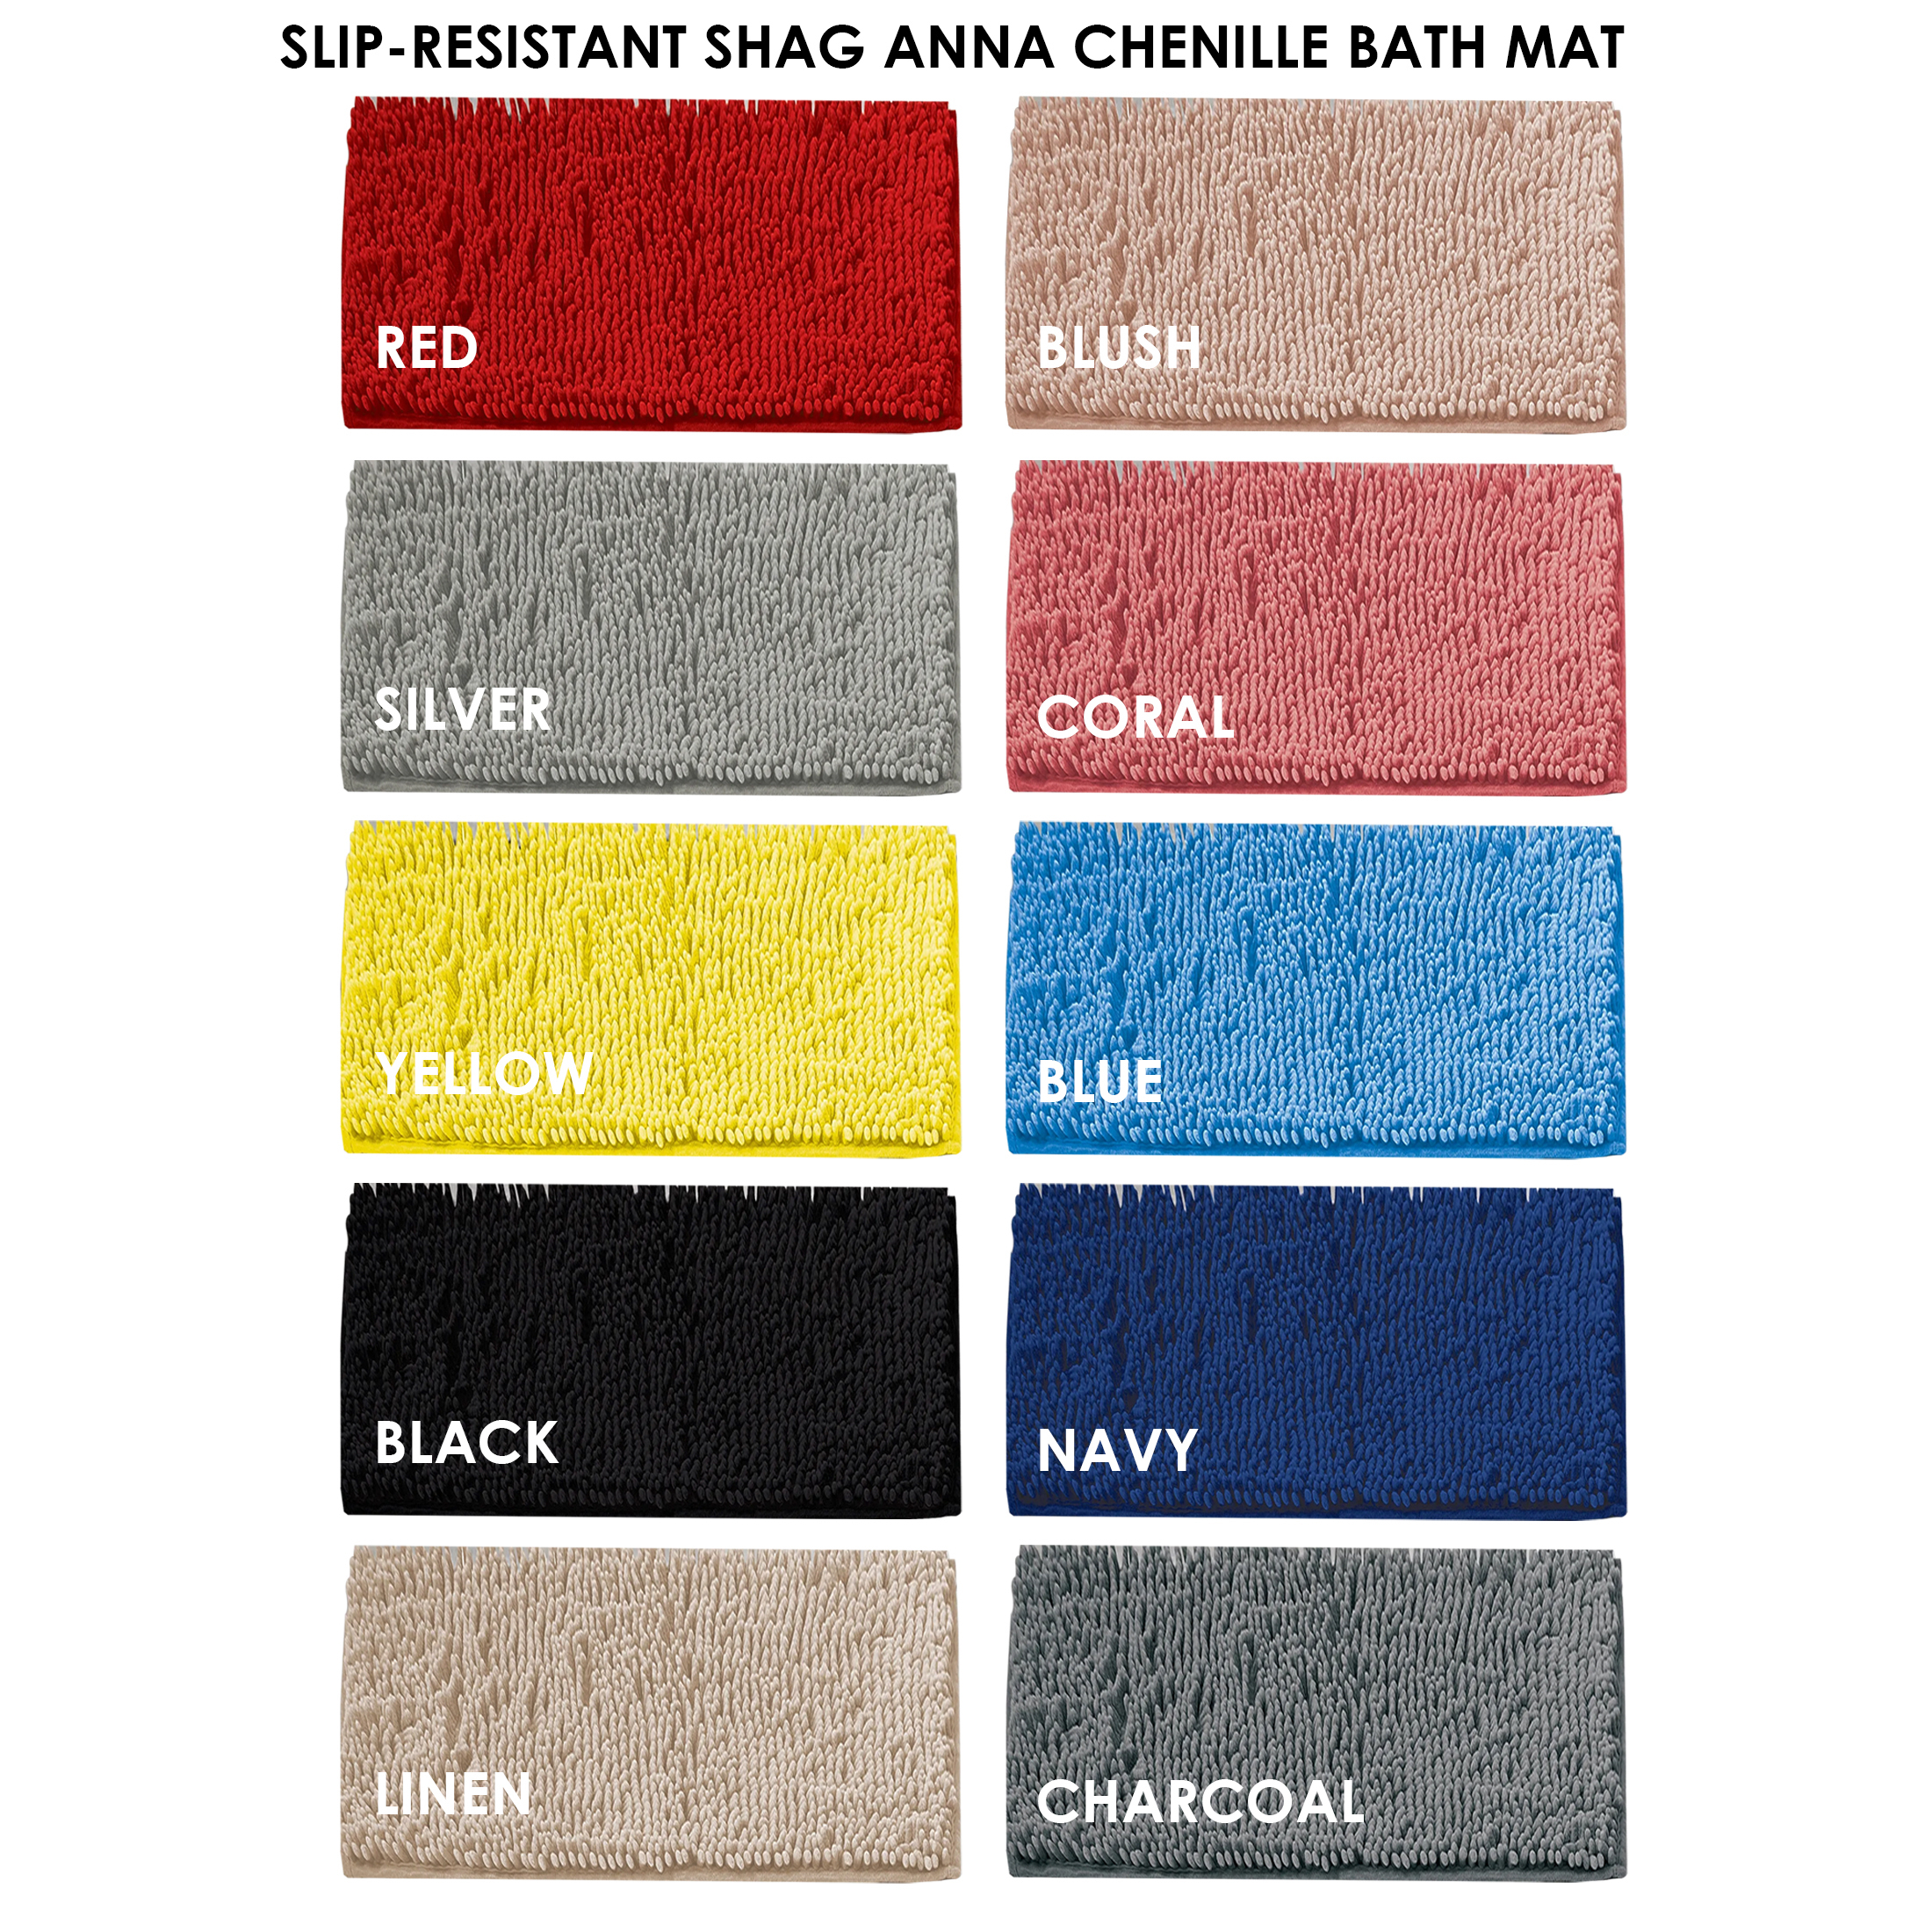 Slip-Resistant Shag Anna Chenille Soft Absorbent Bath Mat Bathroom Rug 17 X 24 - Charcoal